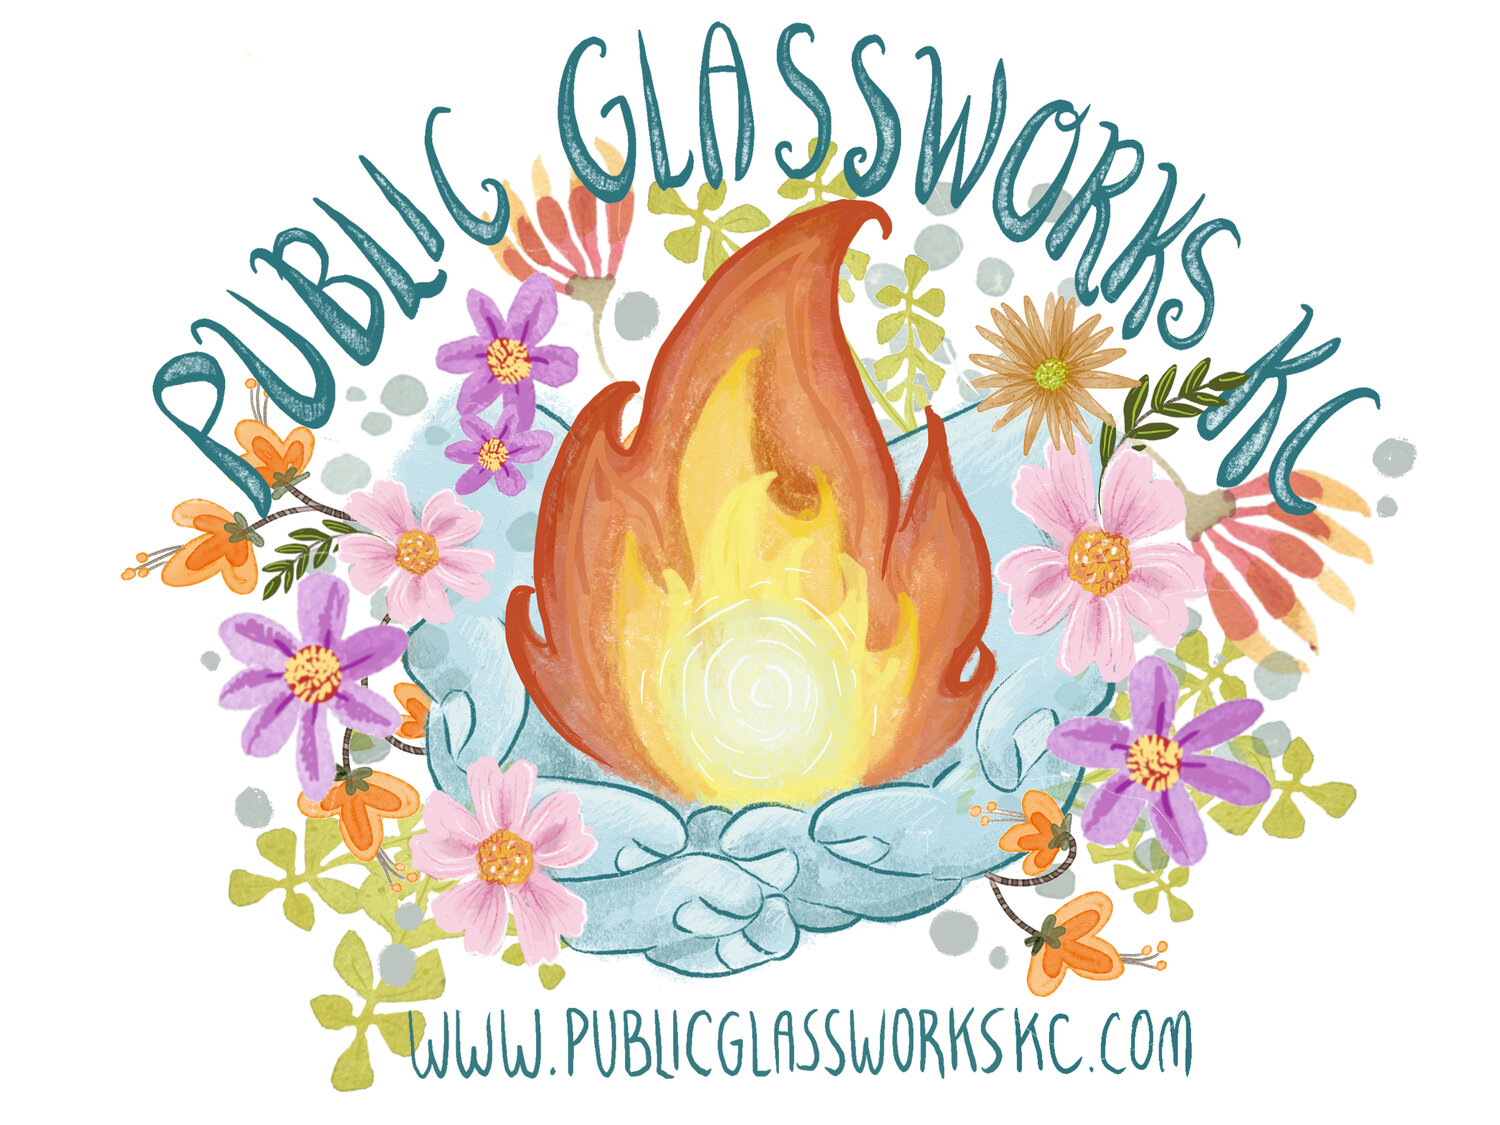 Public GlassWorks Kansas City